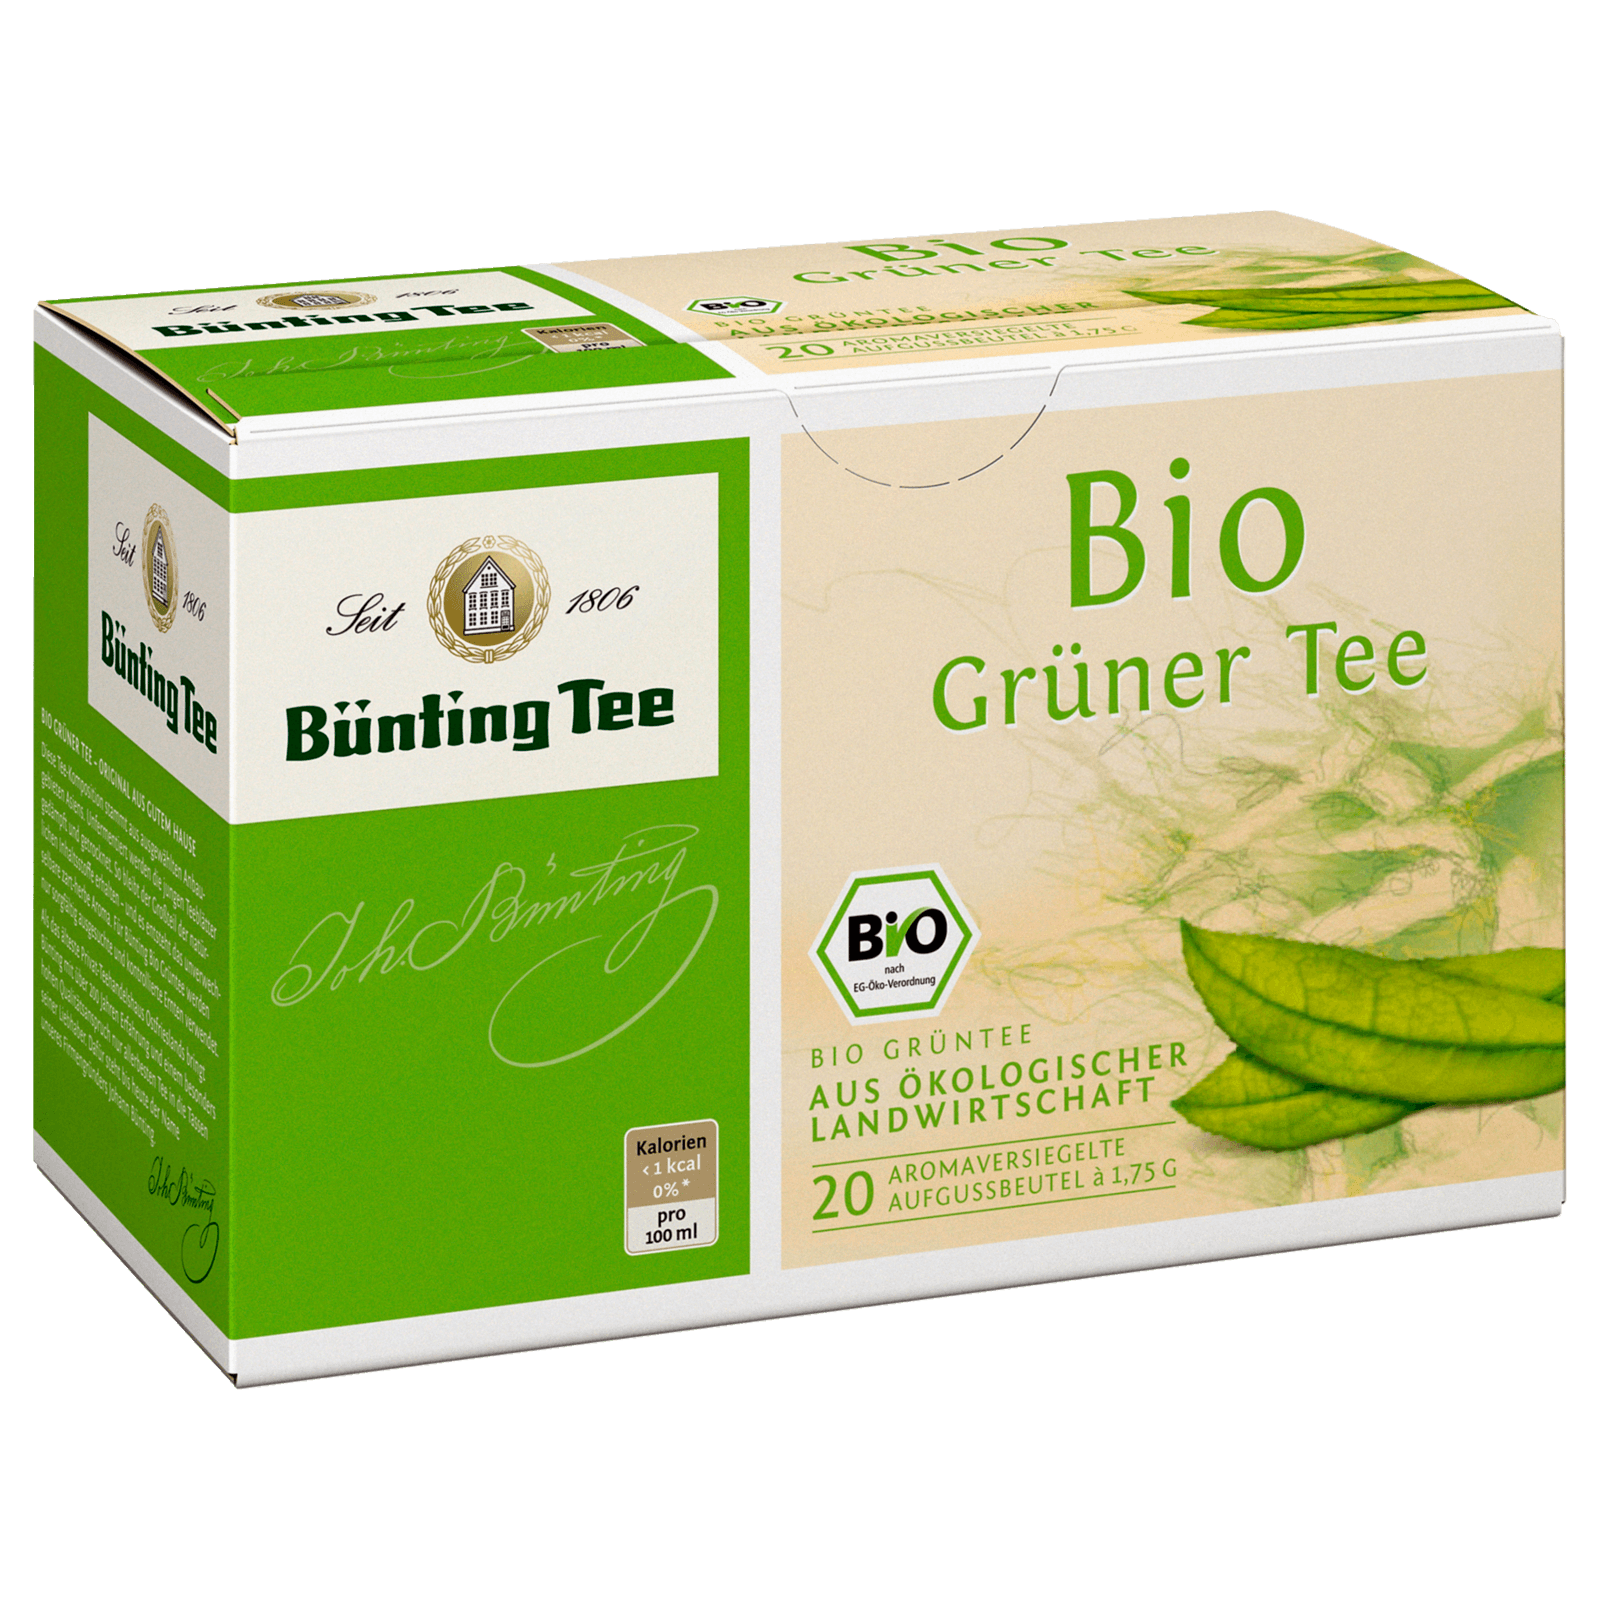 Bünting Tee Bio Grüner Tee 35g, 20 Beutel